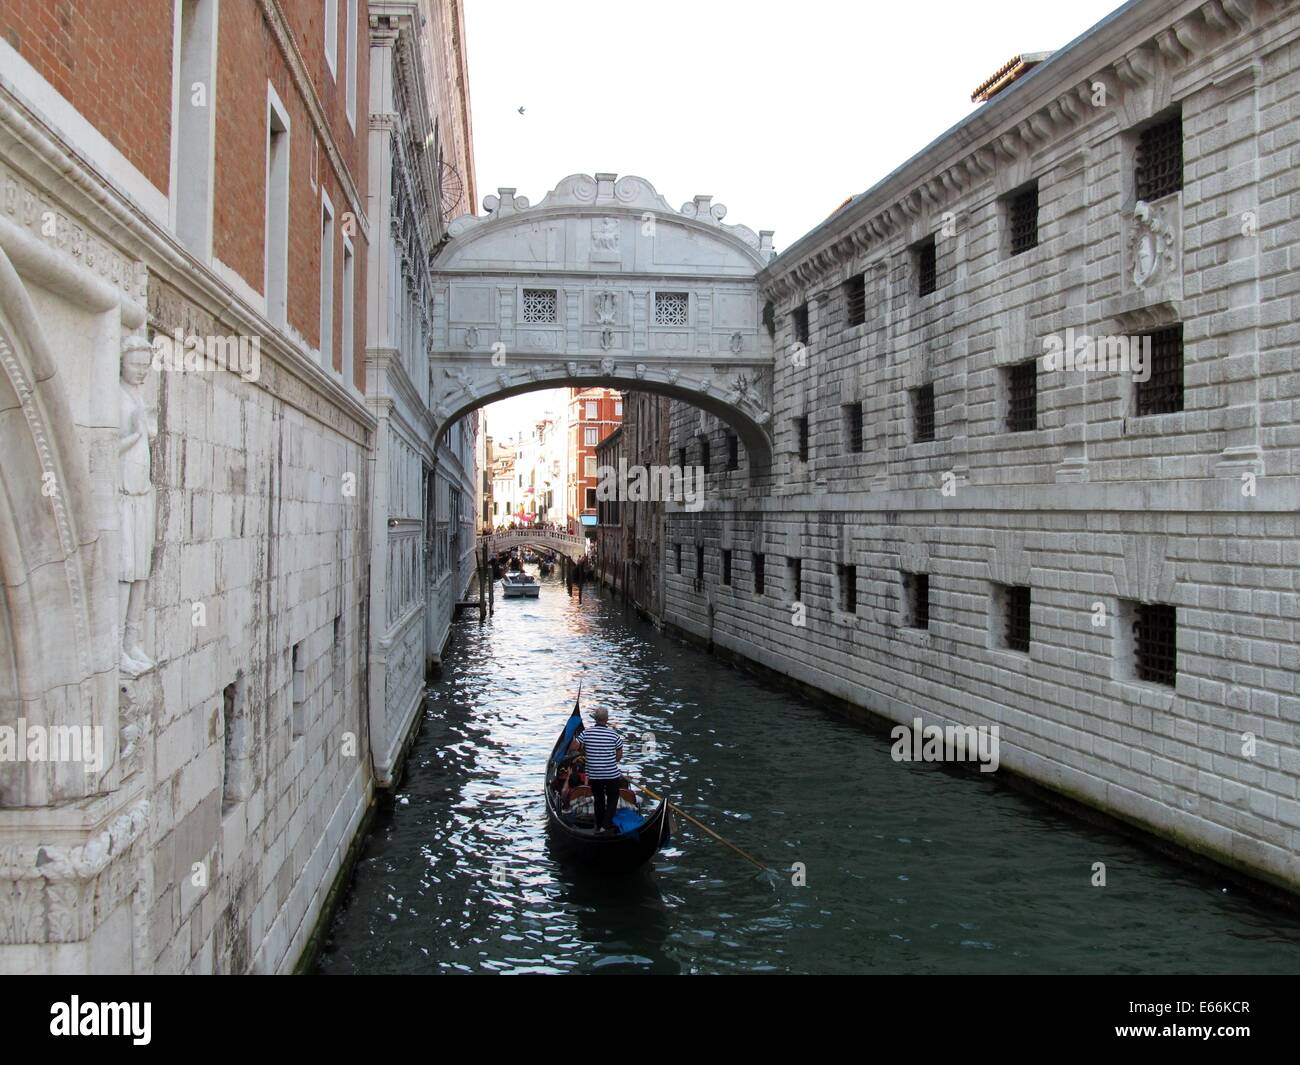 The Bridge Of Sighs in Venice. Stock Photo